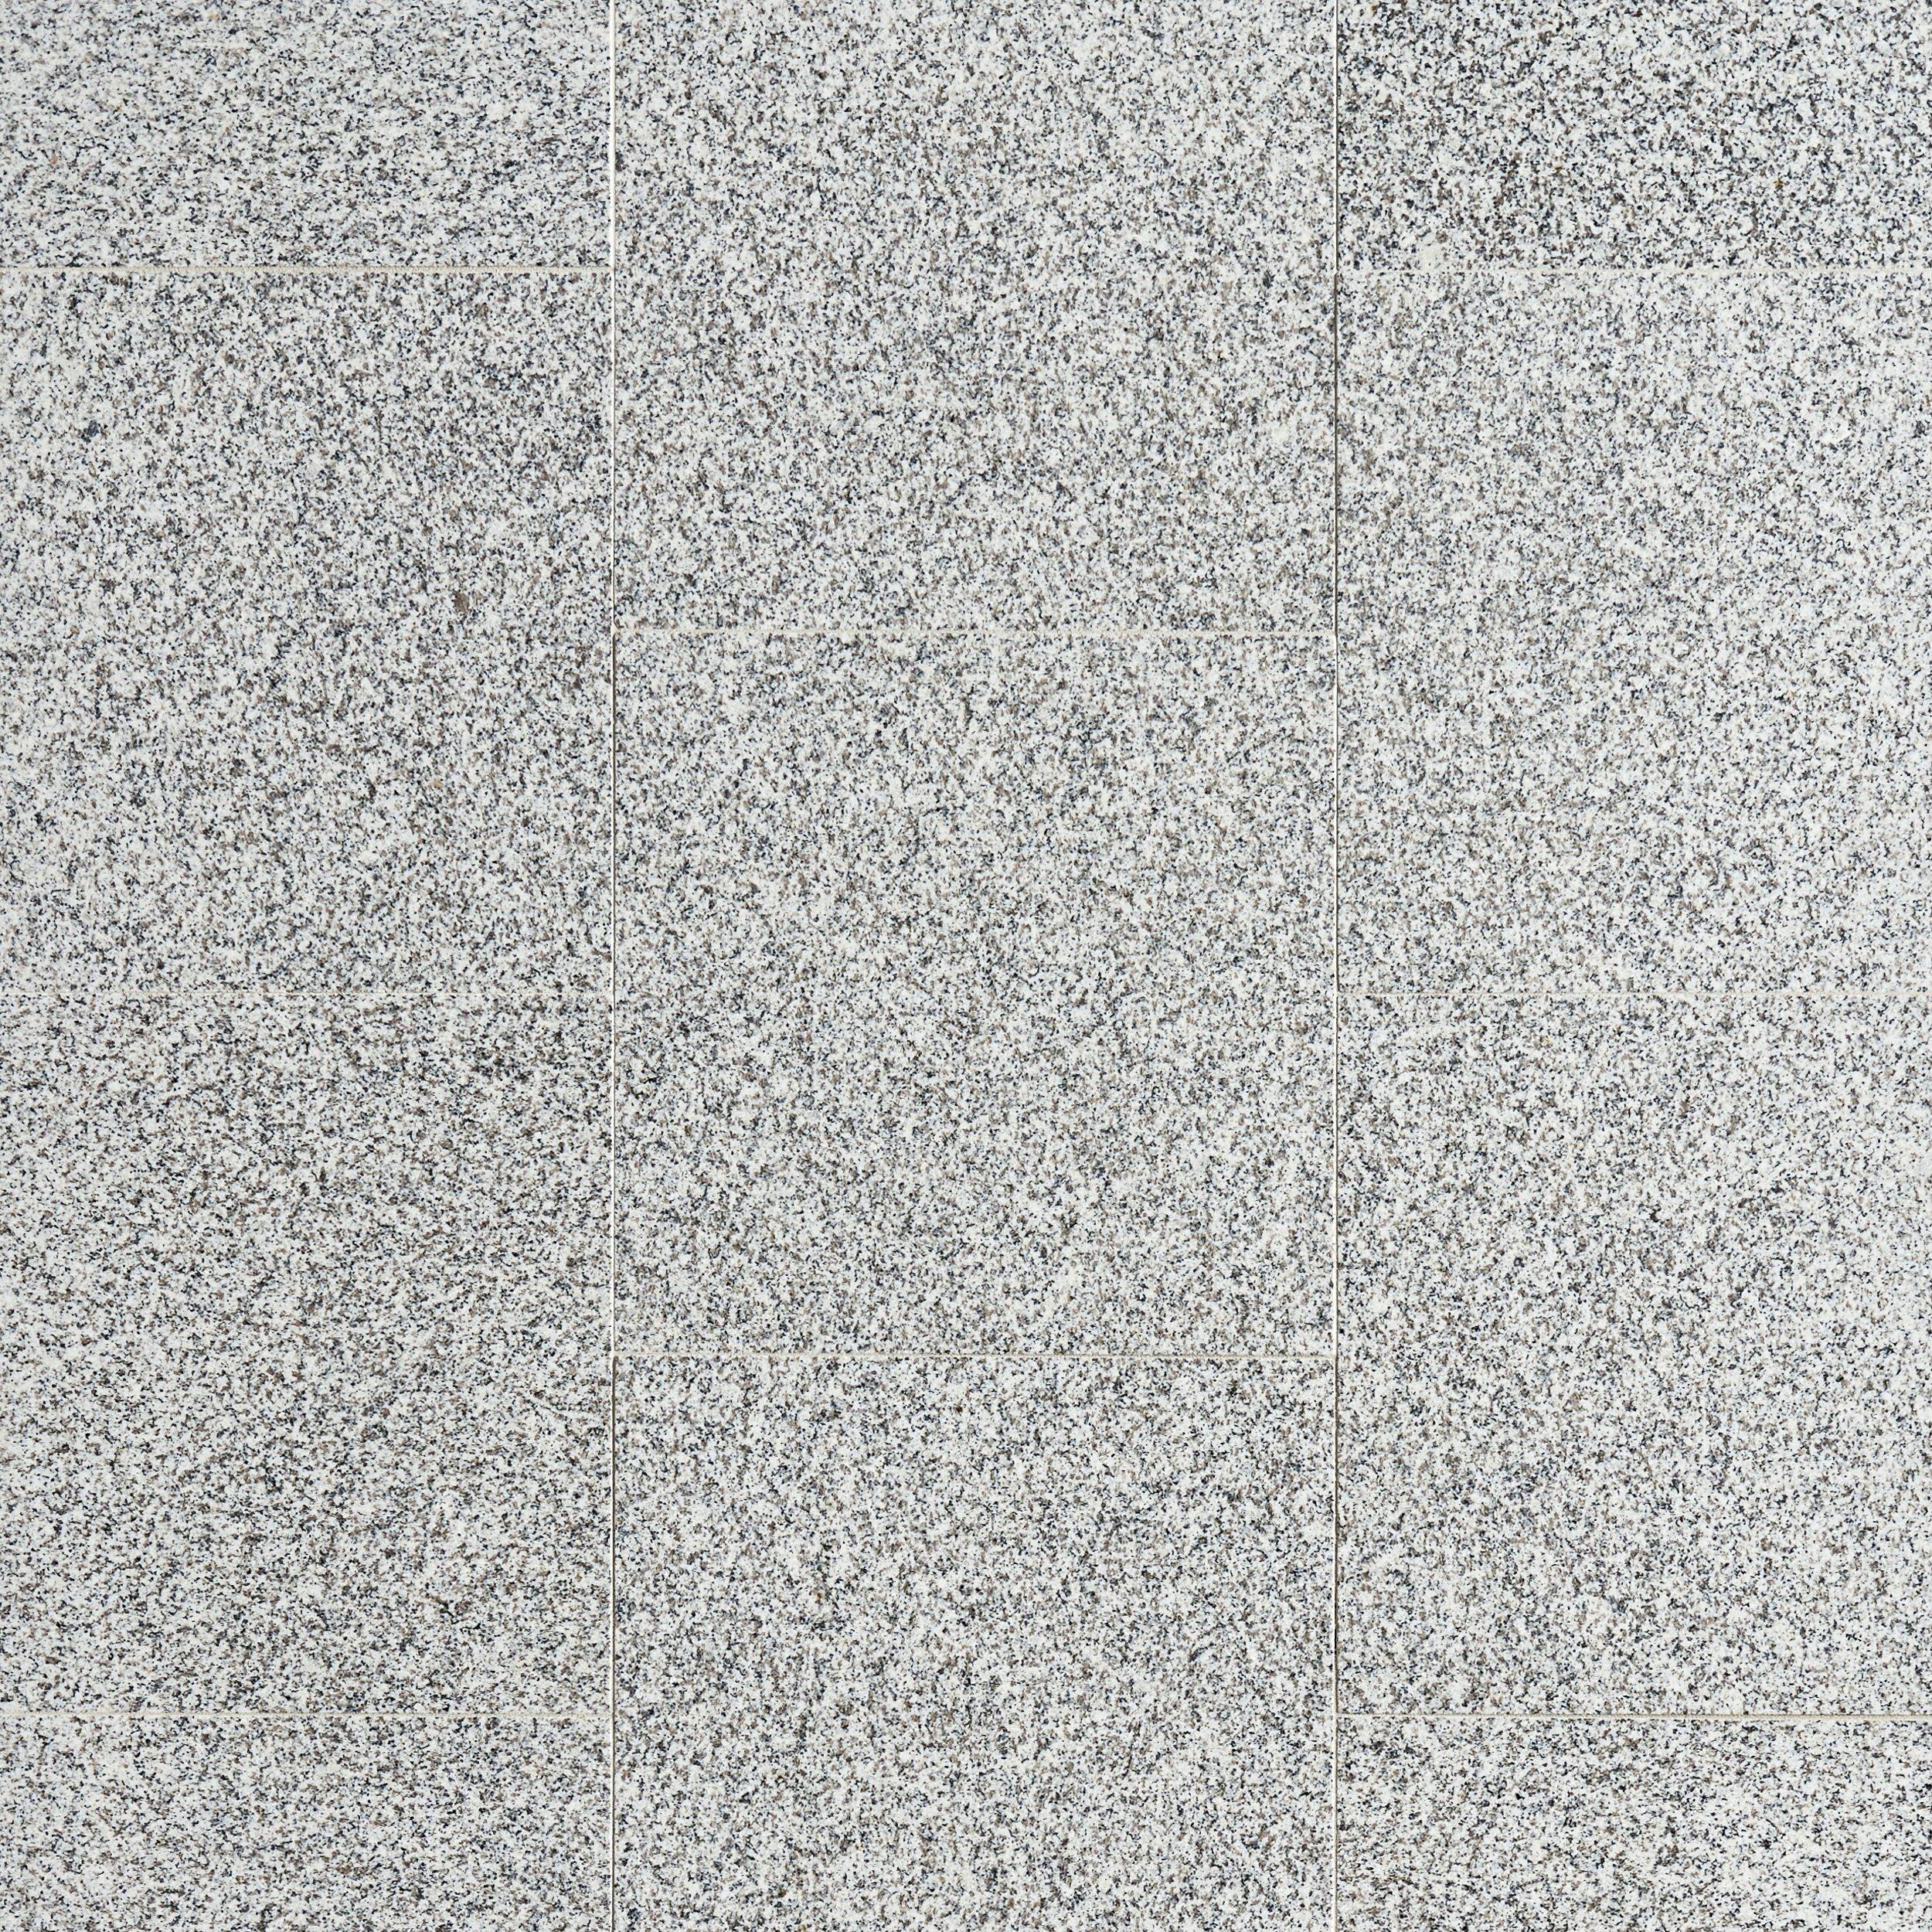 Luna Pearl Granite Tile 12 X 12 923100394 Floor And Decor